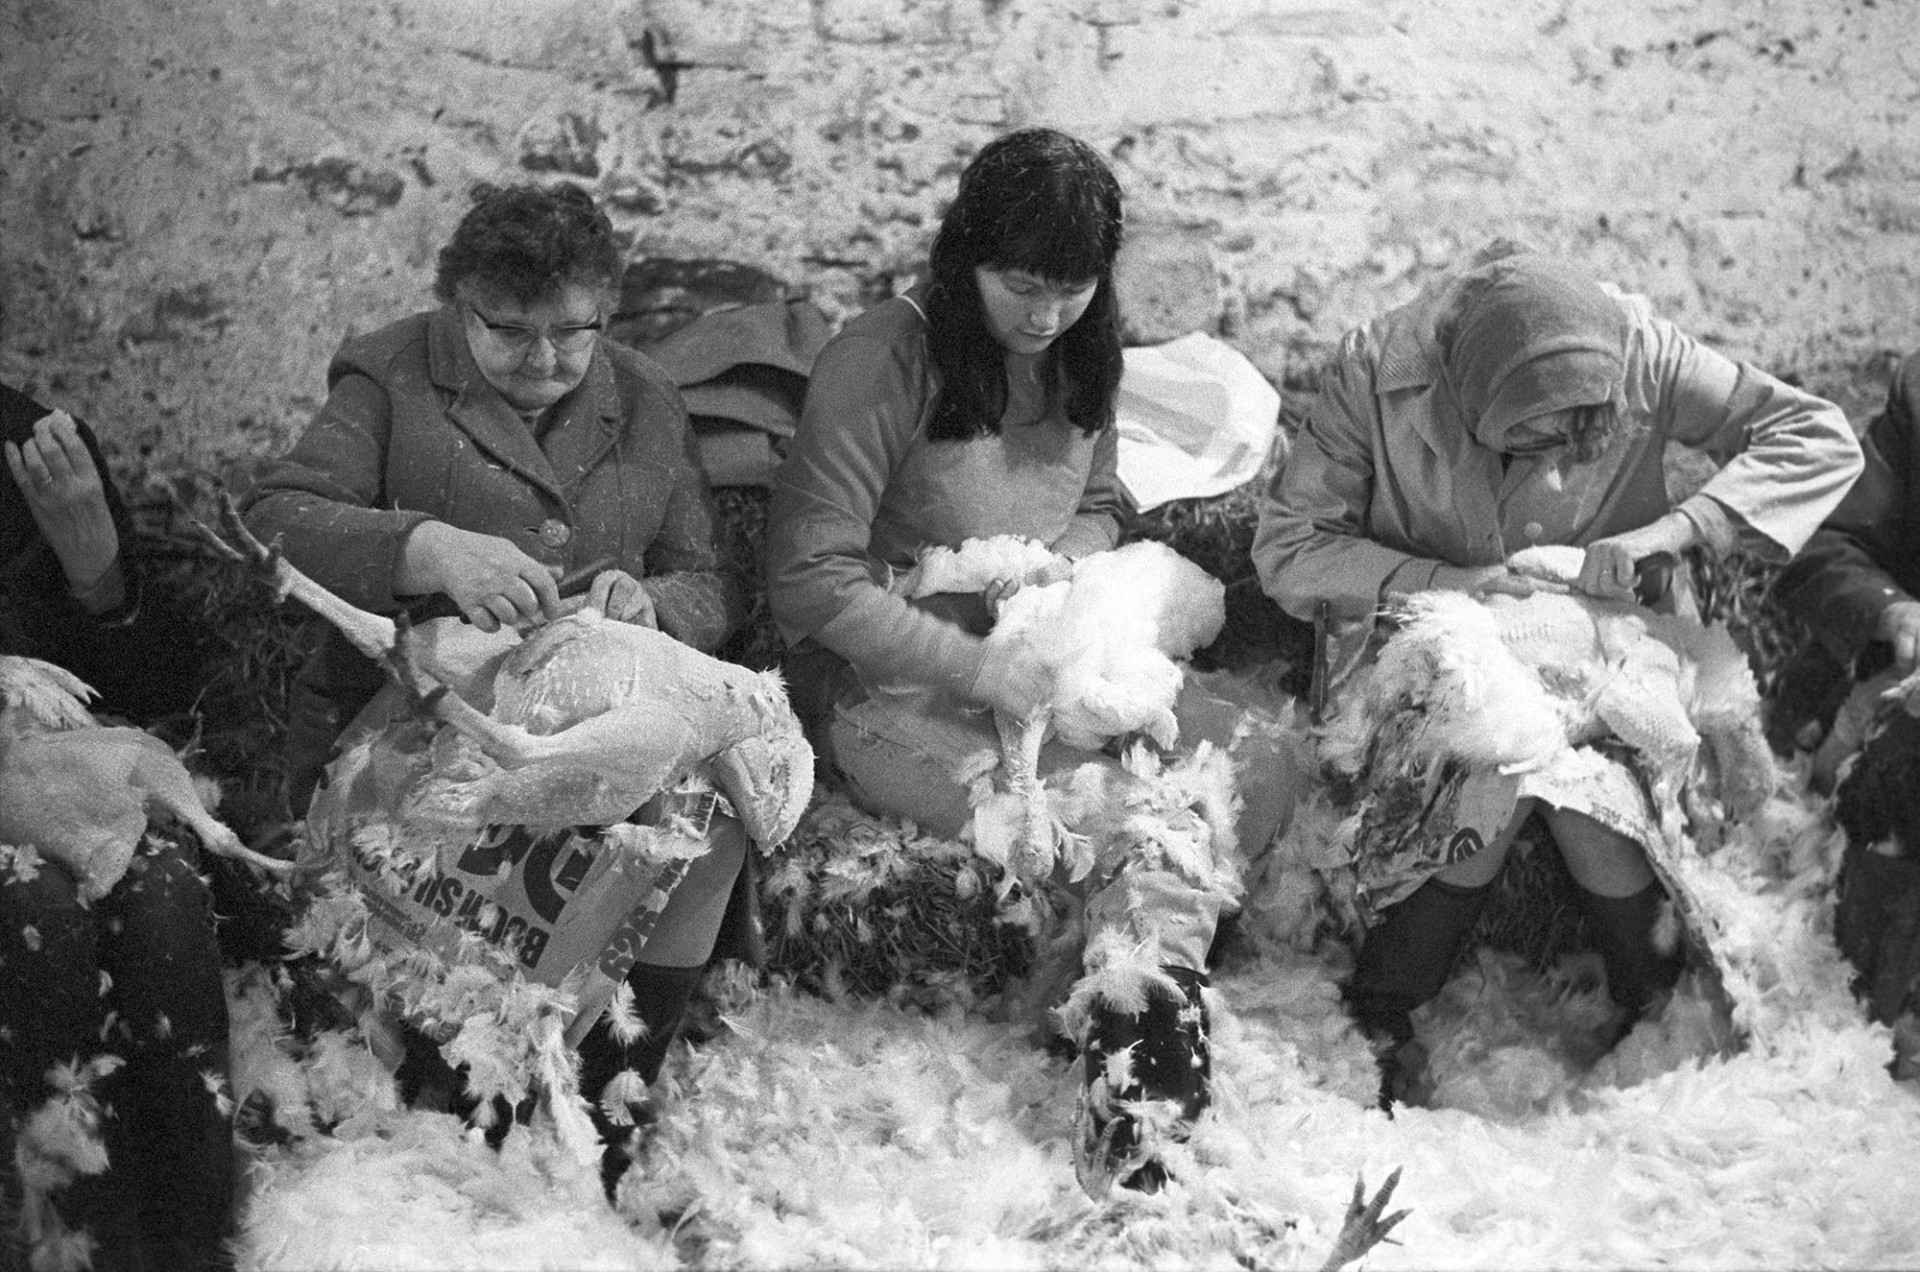 Women plucking Christmas turkeys by James Ravilious